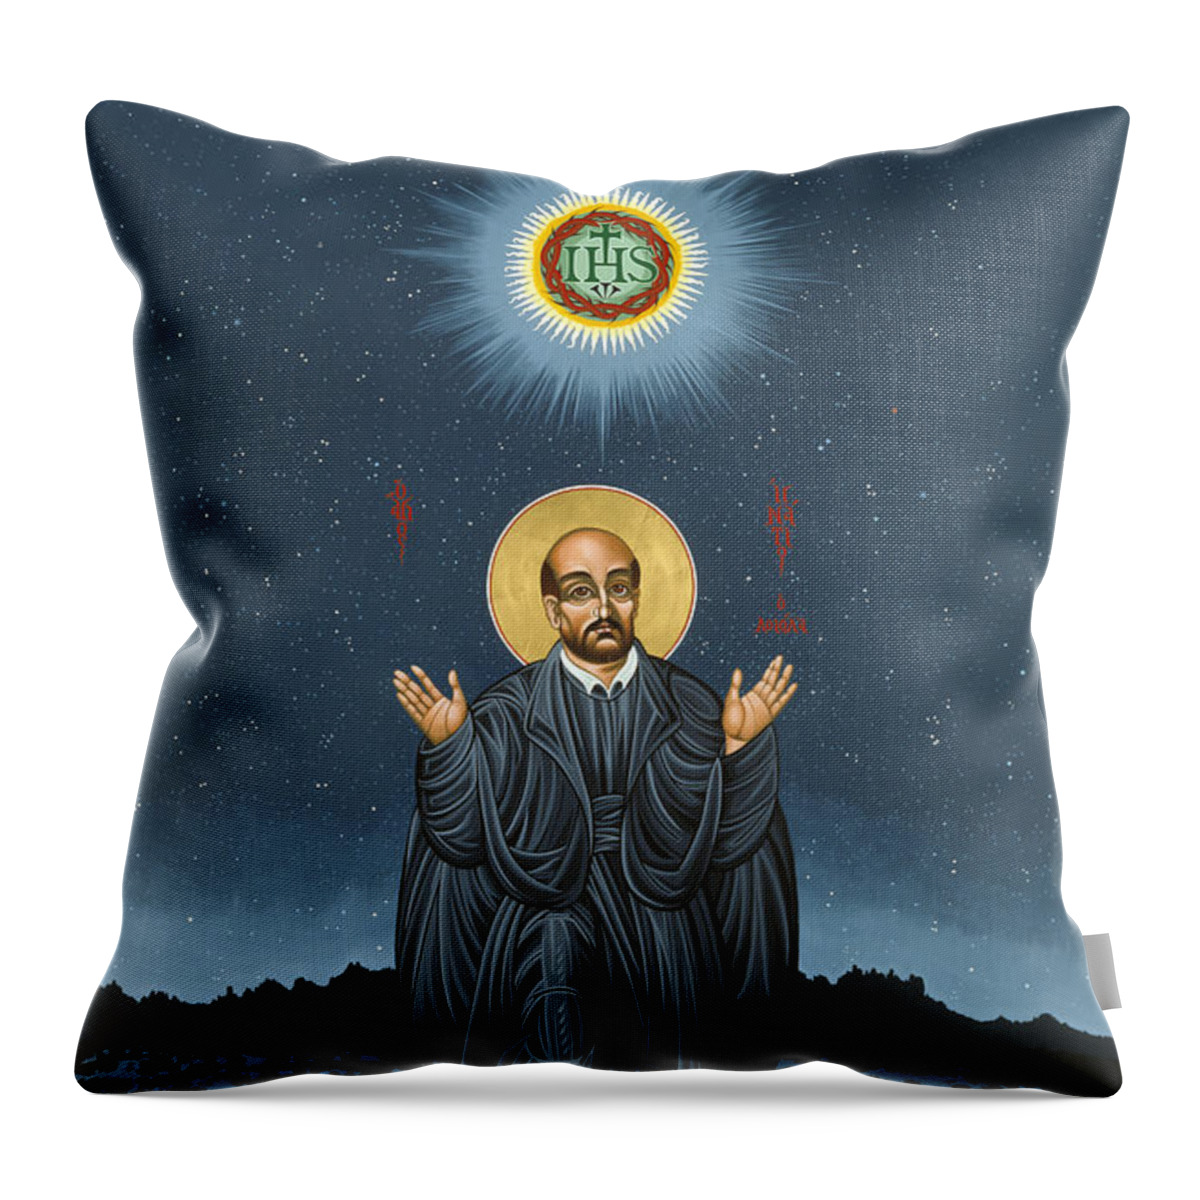 St. Ignatius Throw Pillow featuring the painting St. Ignatius in Prayer Beneath the Stars 137 by William Hart McNichols